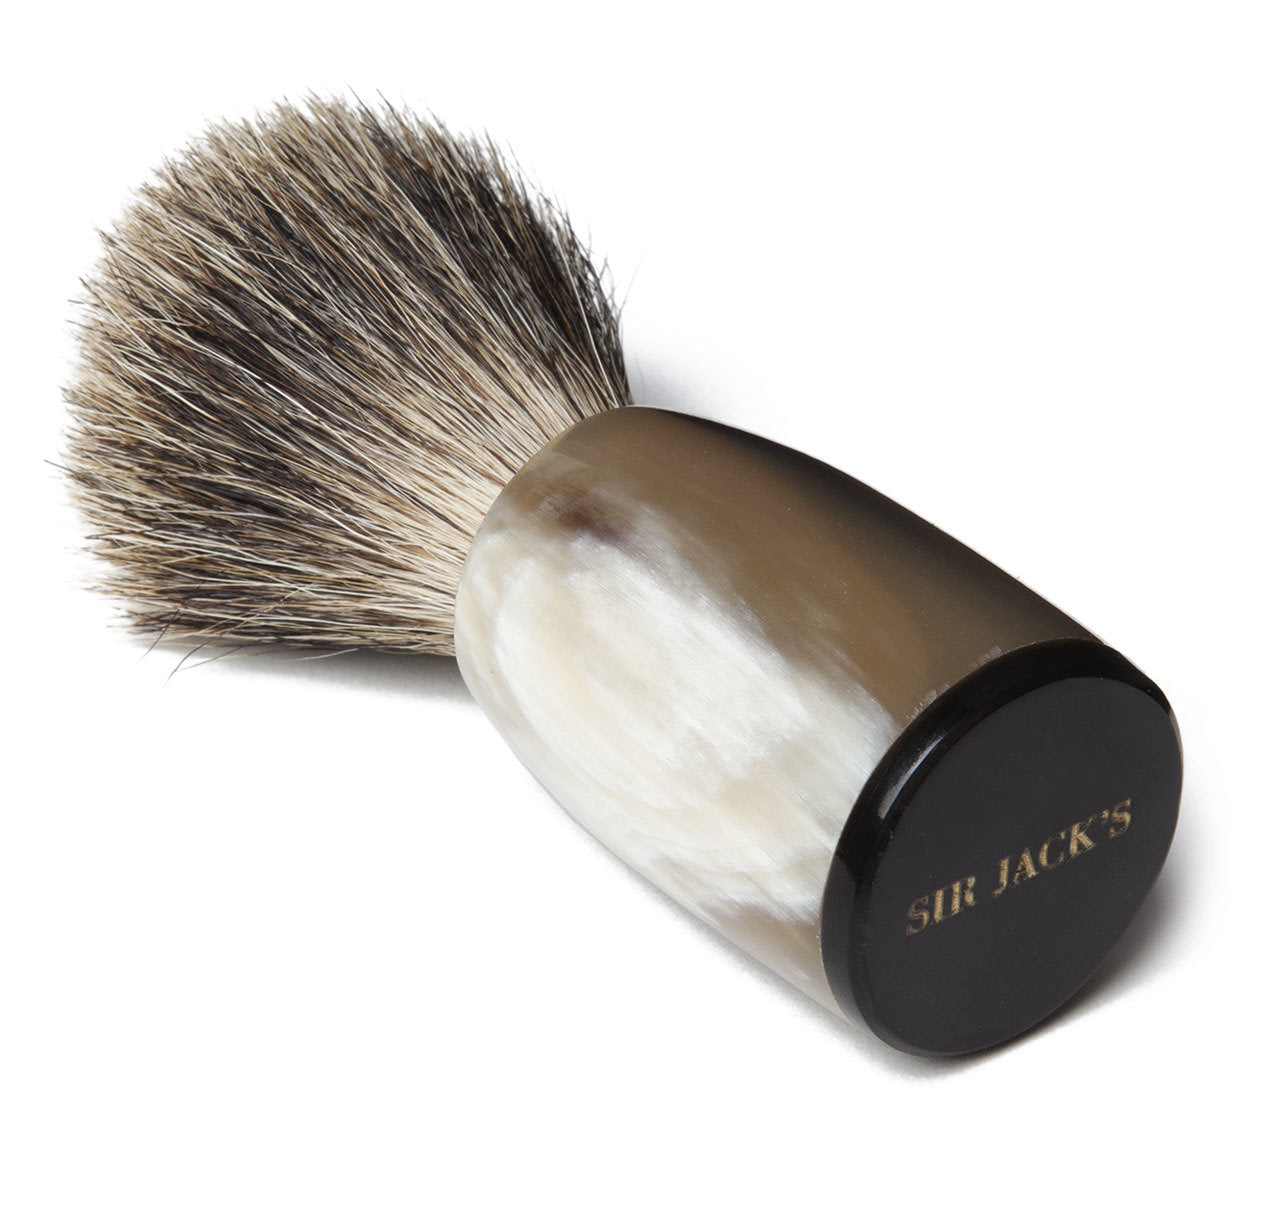 Sir Jack's Ox Horn Handle Badger Brush